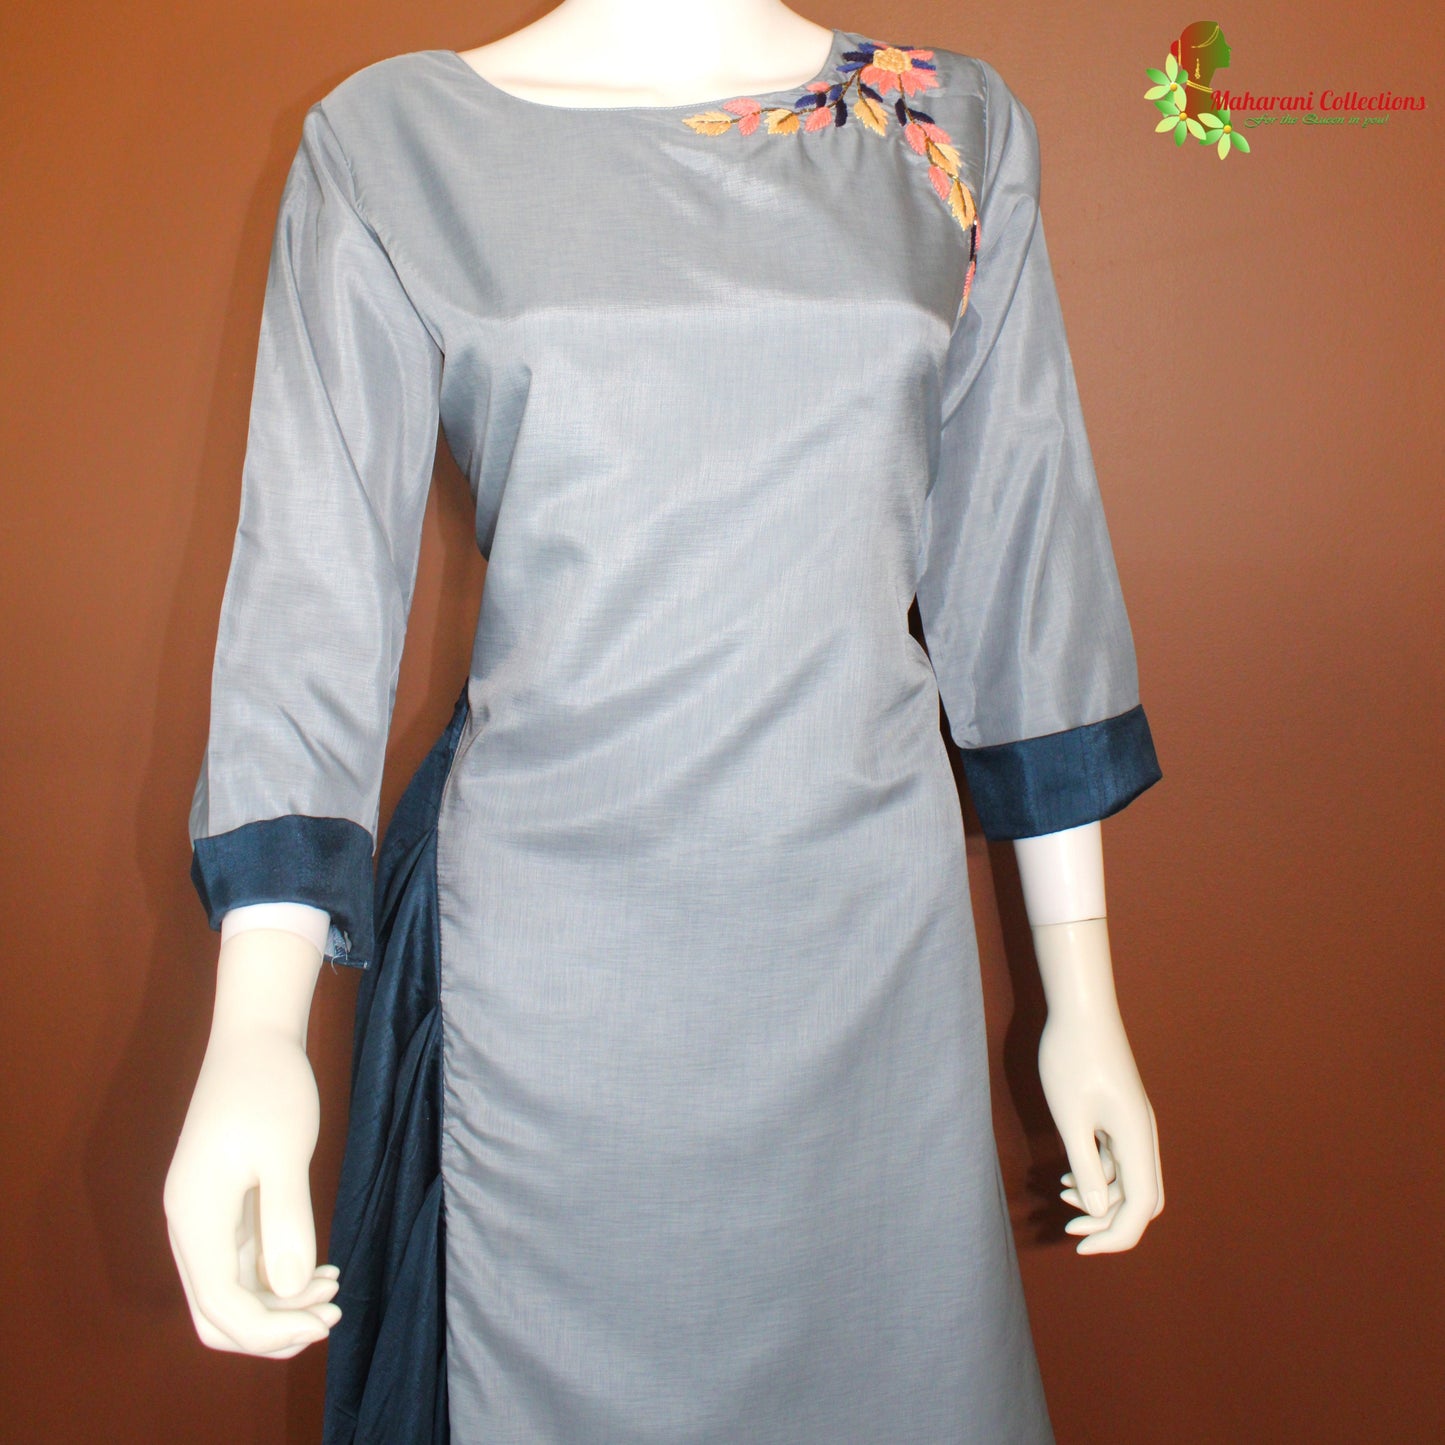 Maharani's Satin Silk Long Dress - Sapphire Blue (XL)